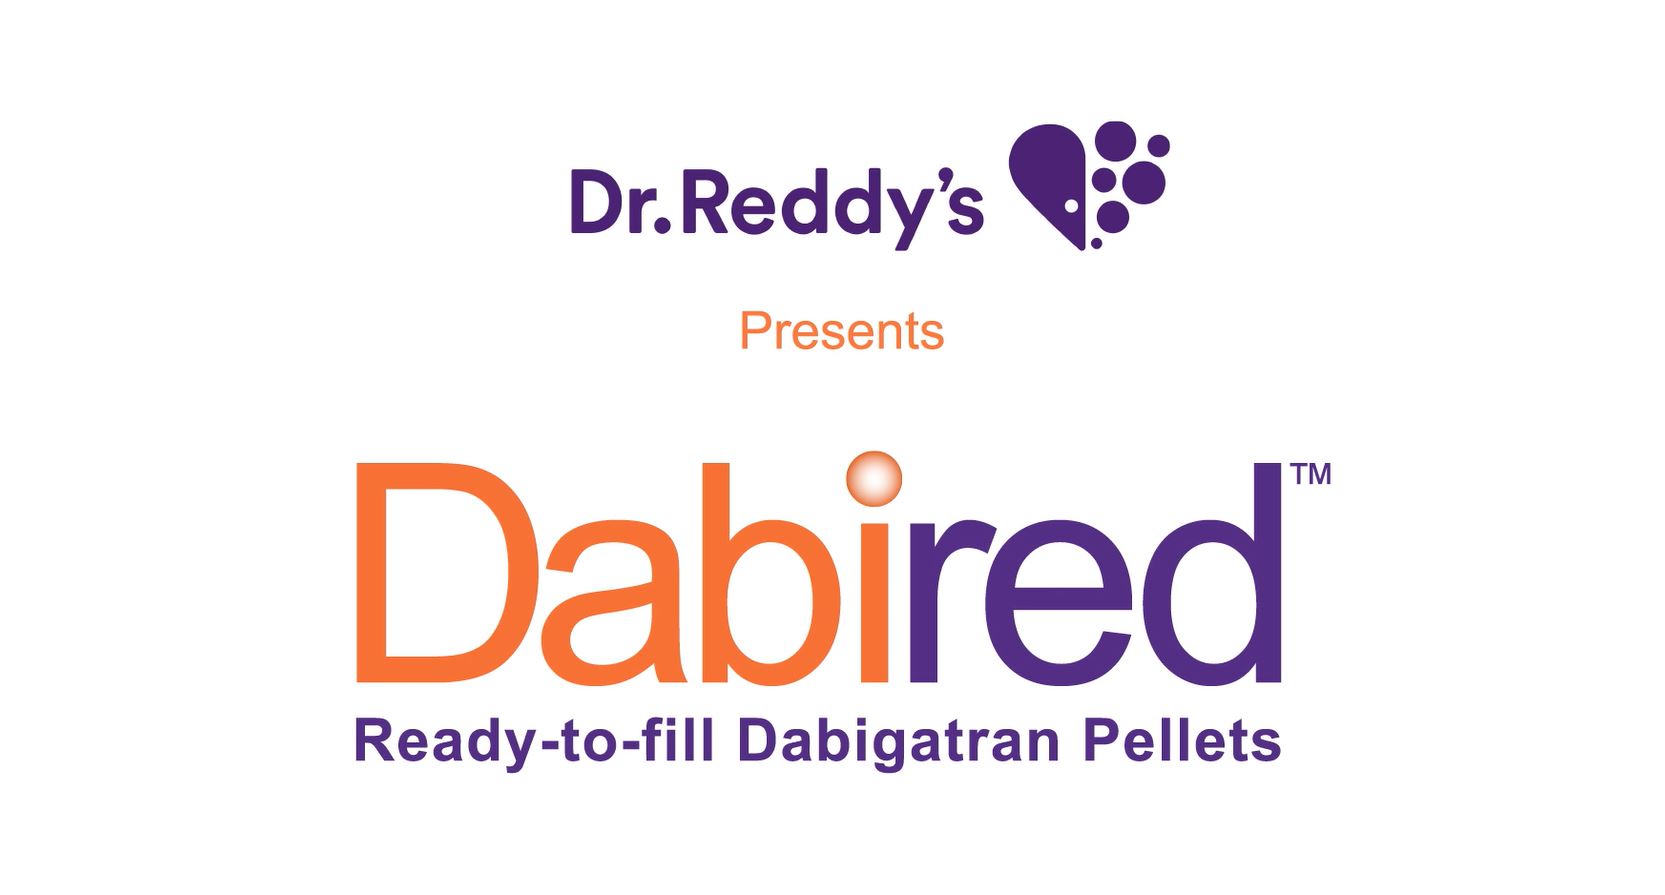 Dabired - ready-to-fill Dabigatran pellets